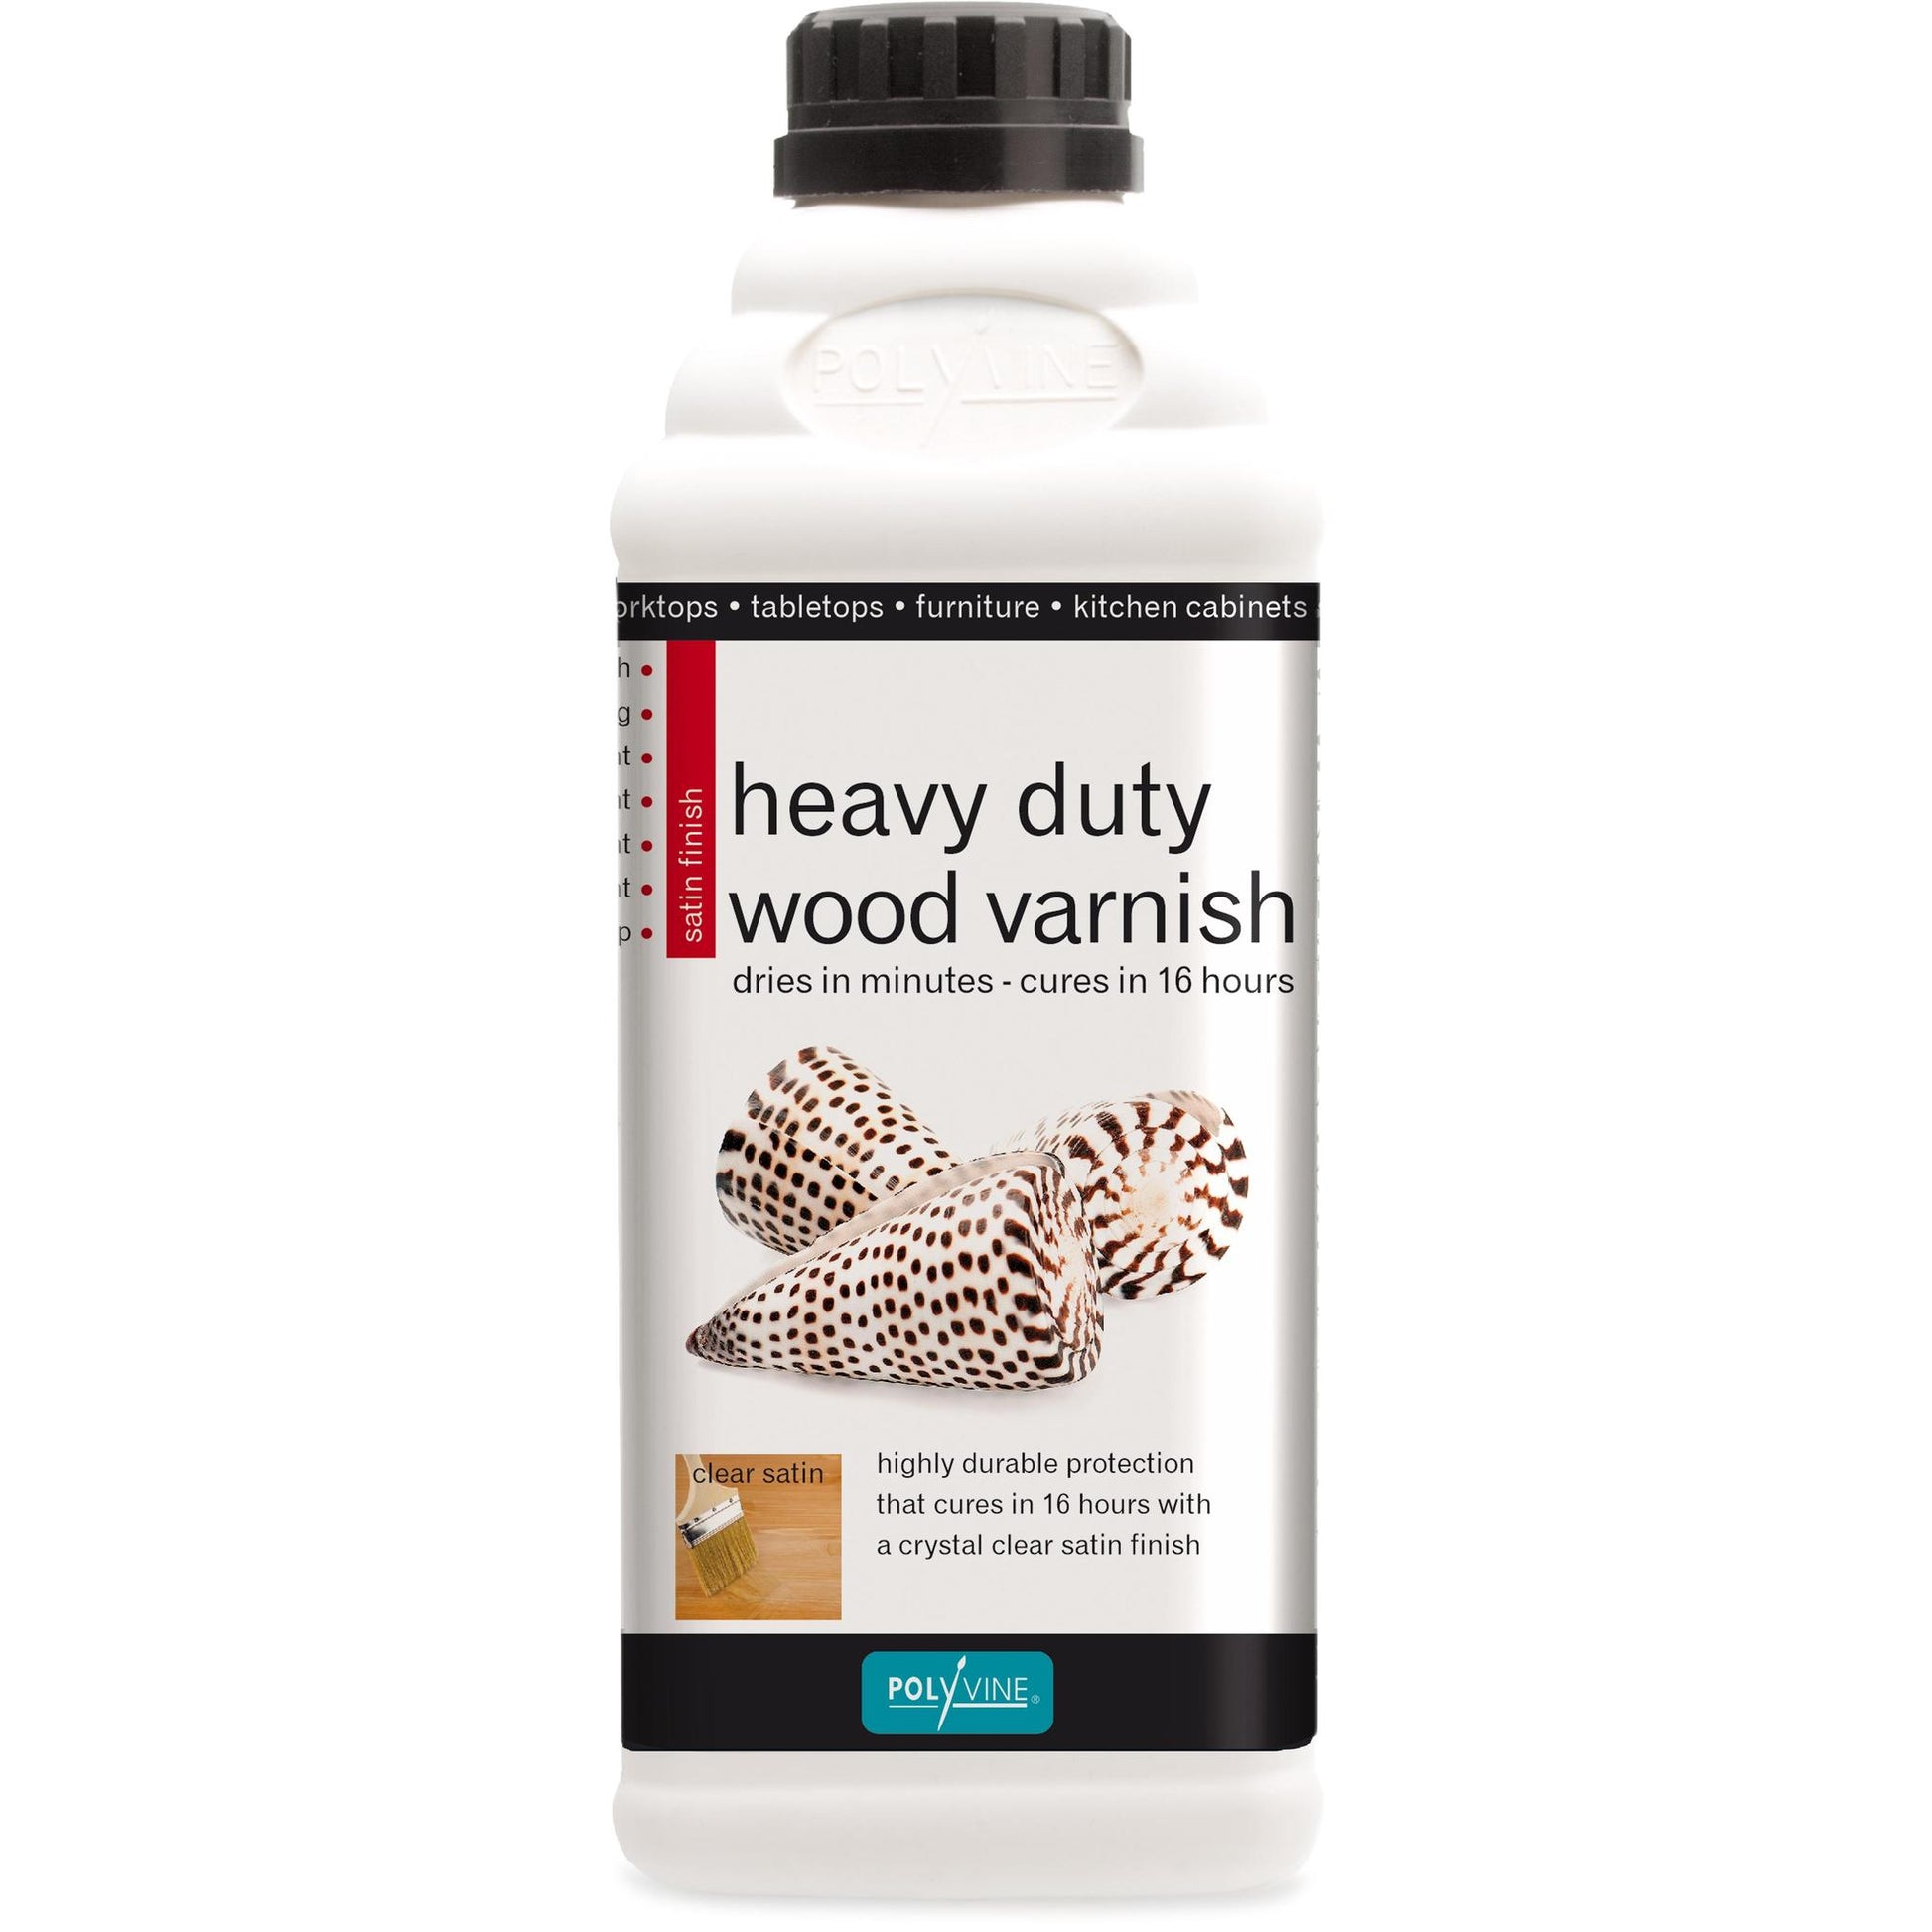 Polyvine - Heavy Duty Wood Varnish, Satin Clear